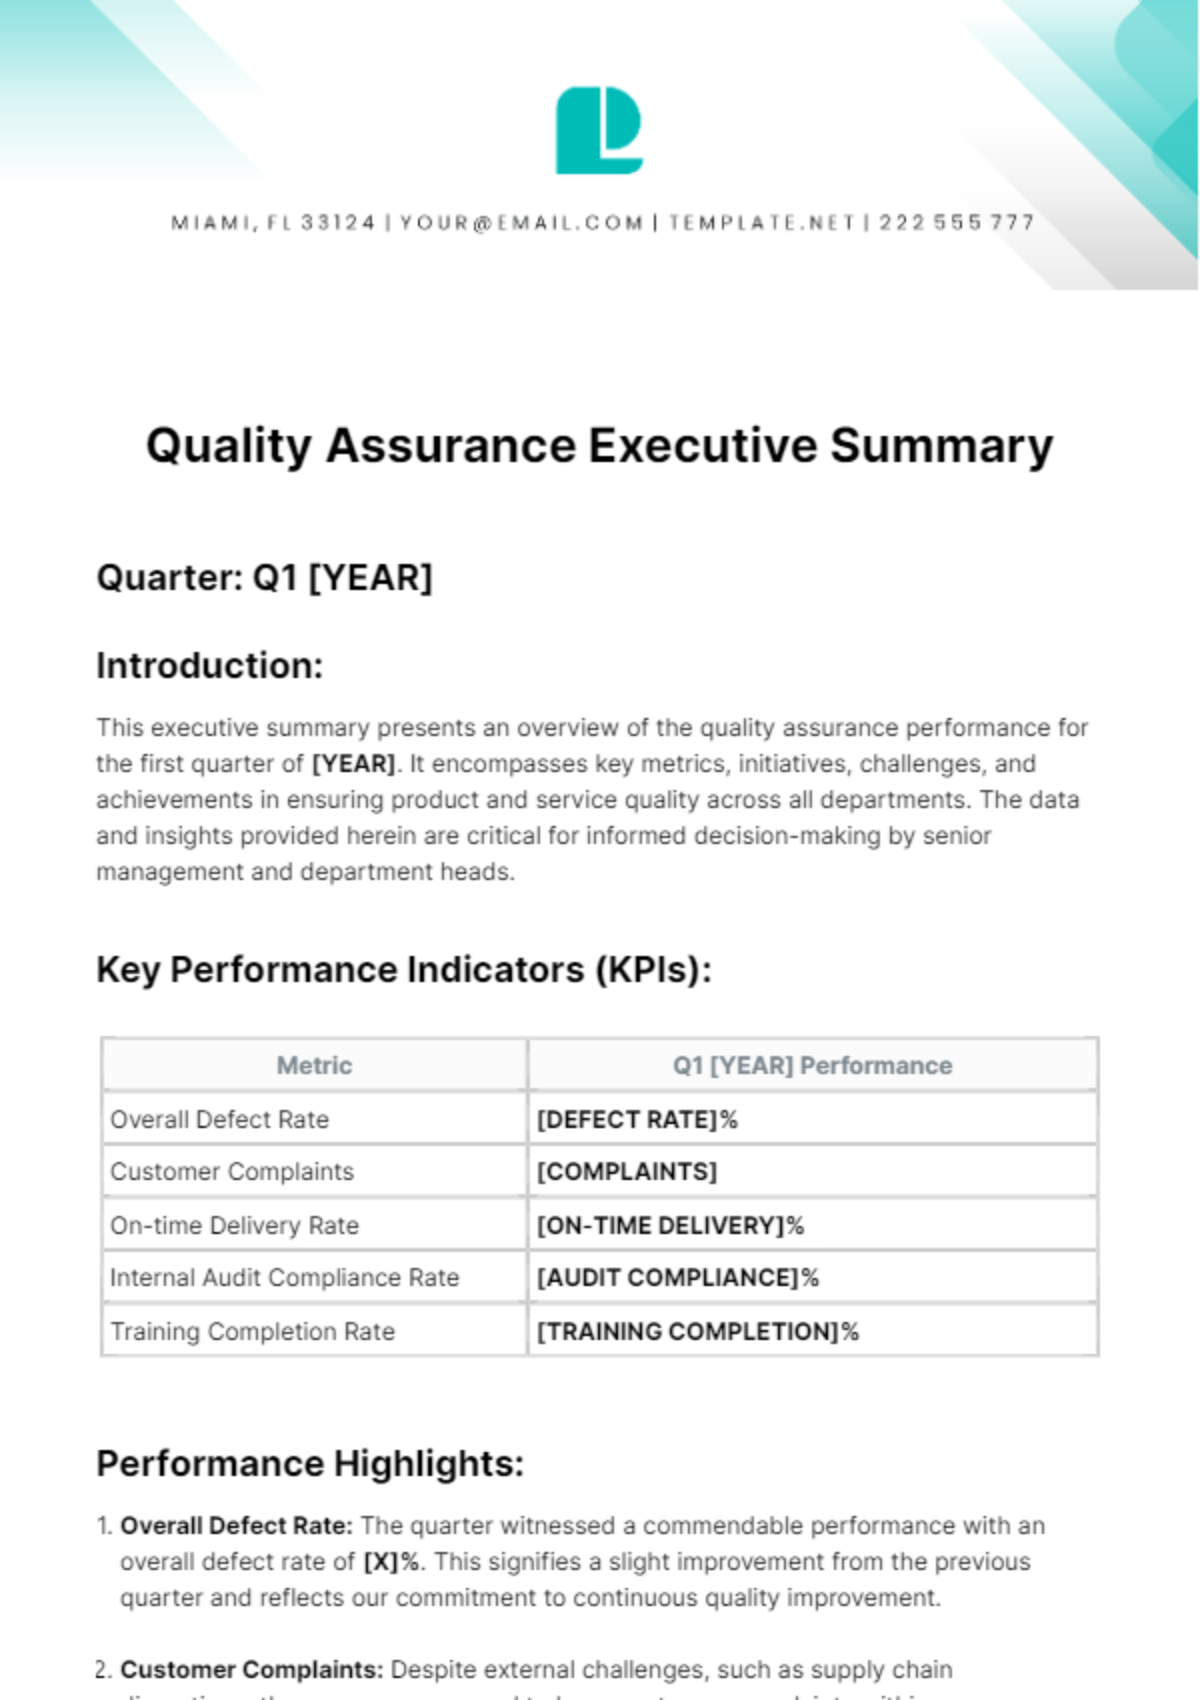 Quality Assurance Executive Summary Template